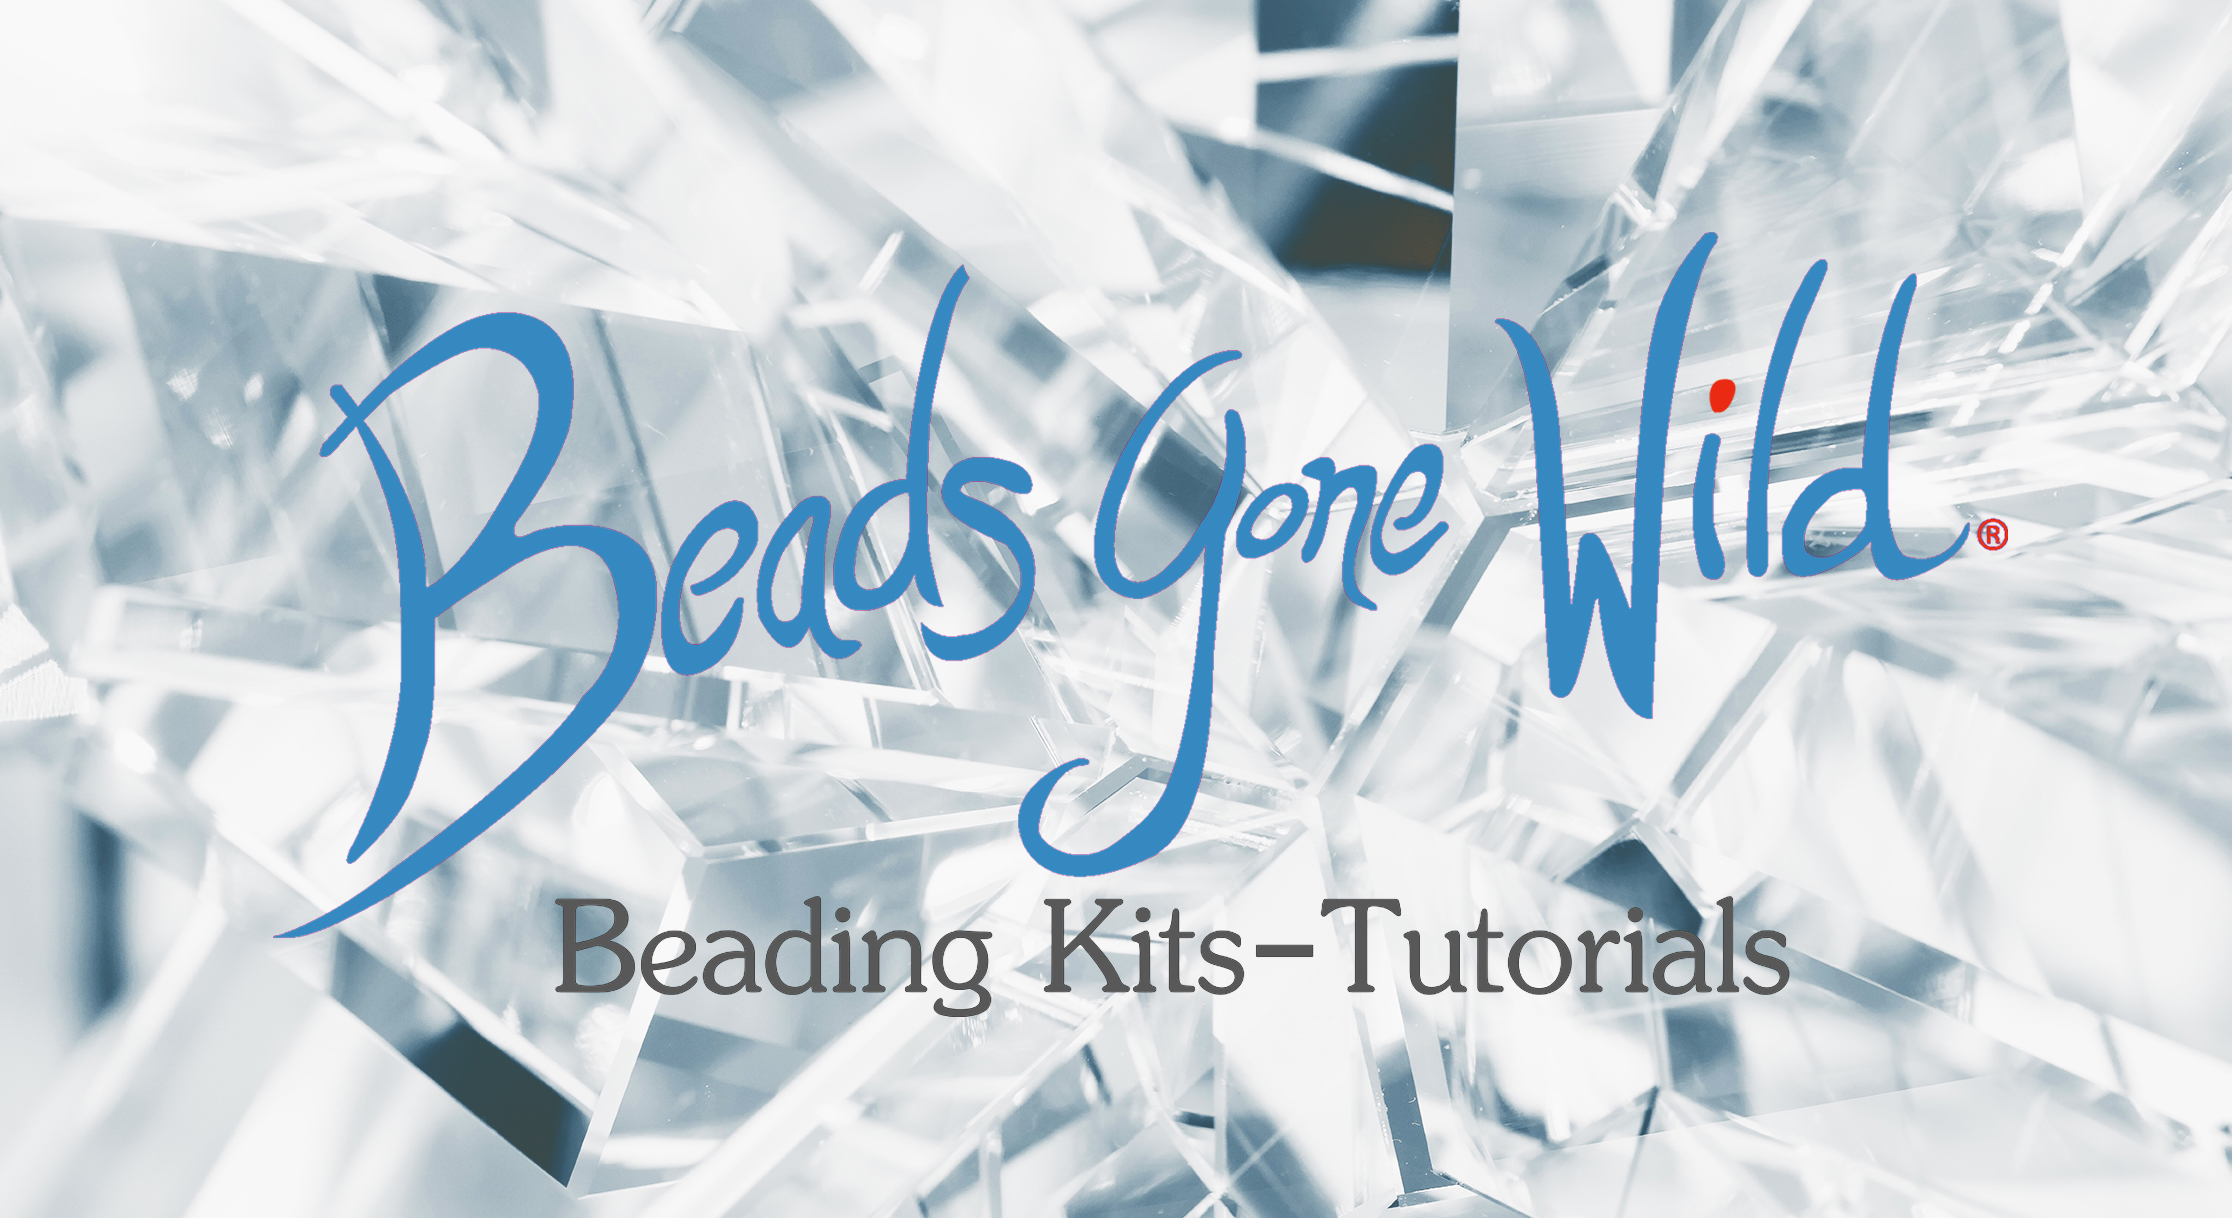 Beads Gone Wild Beading Kits, tutorials, Supplies